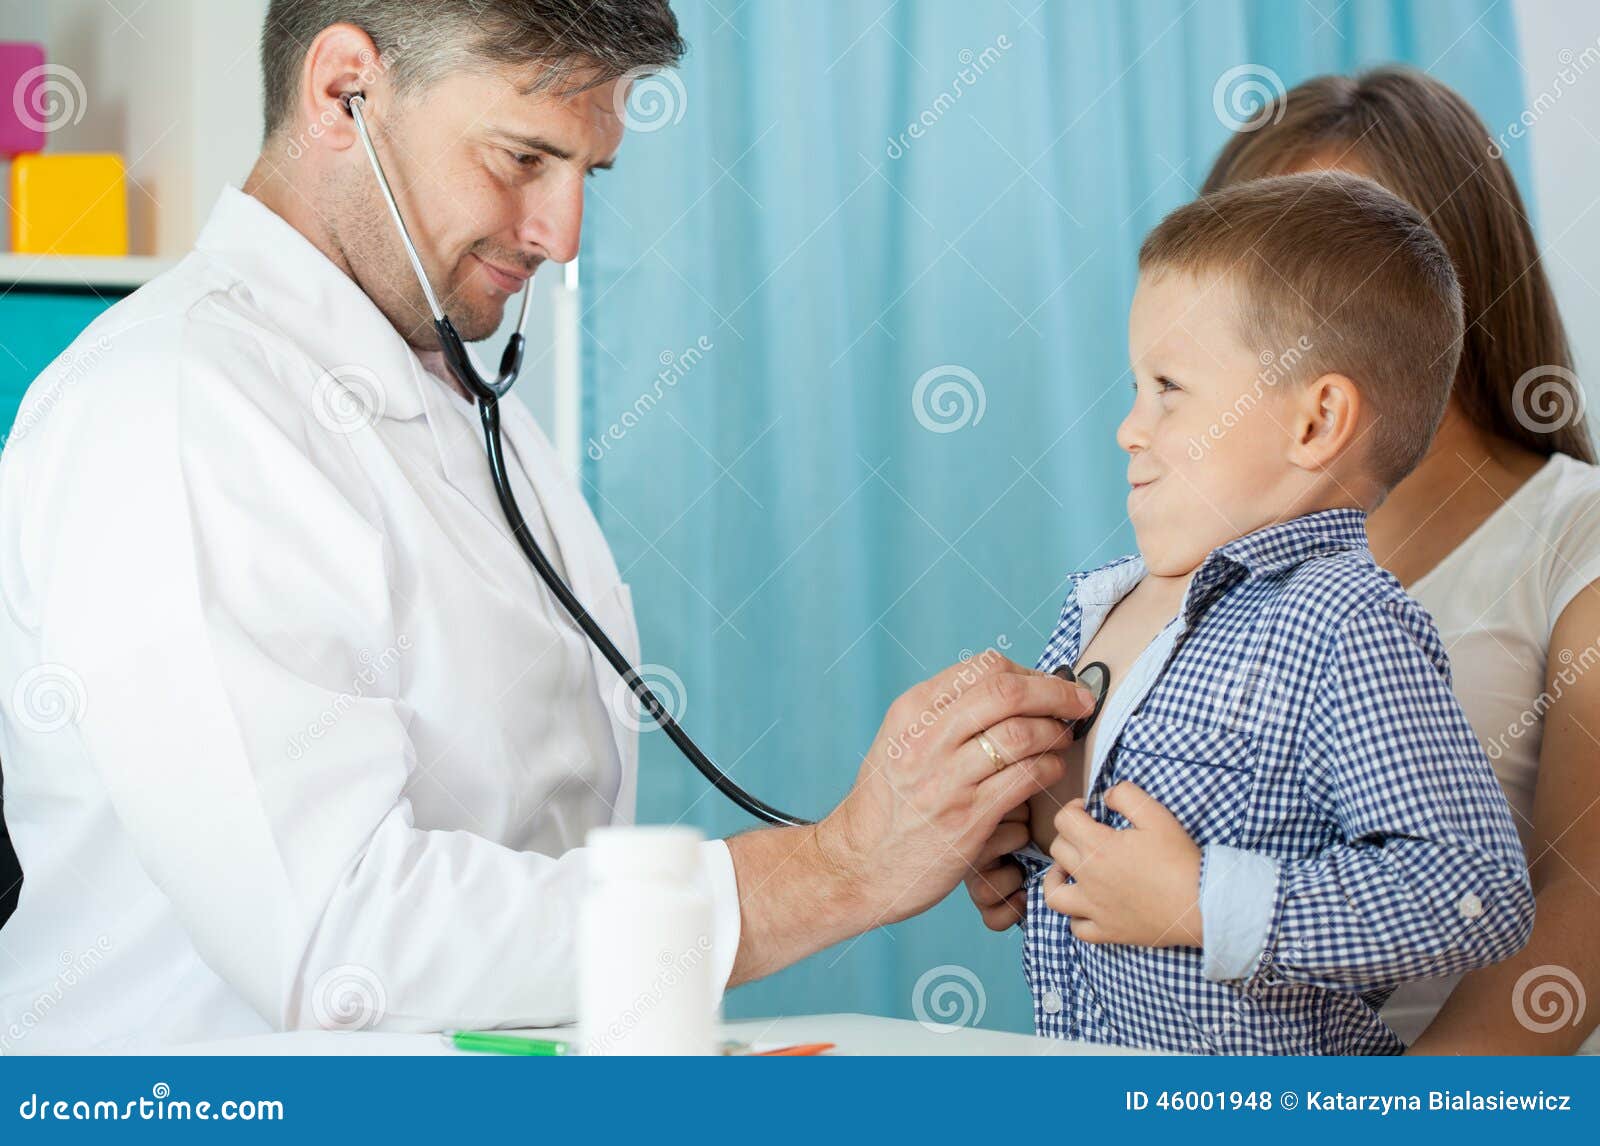 pediatrist examinate patient with stethoscope